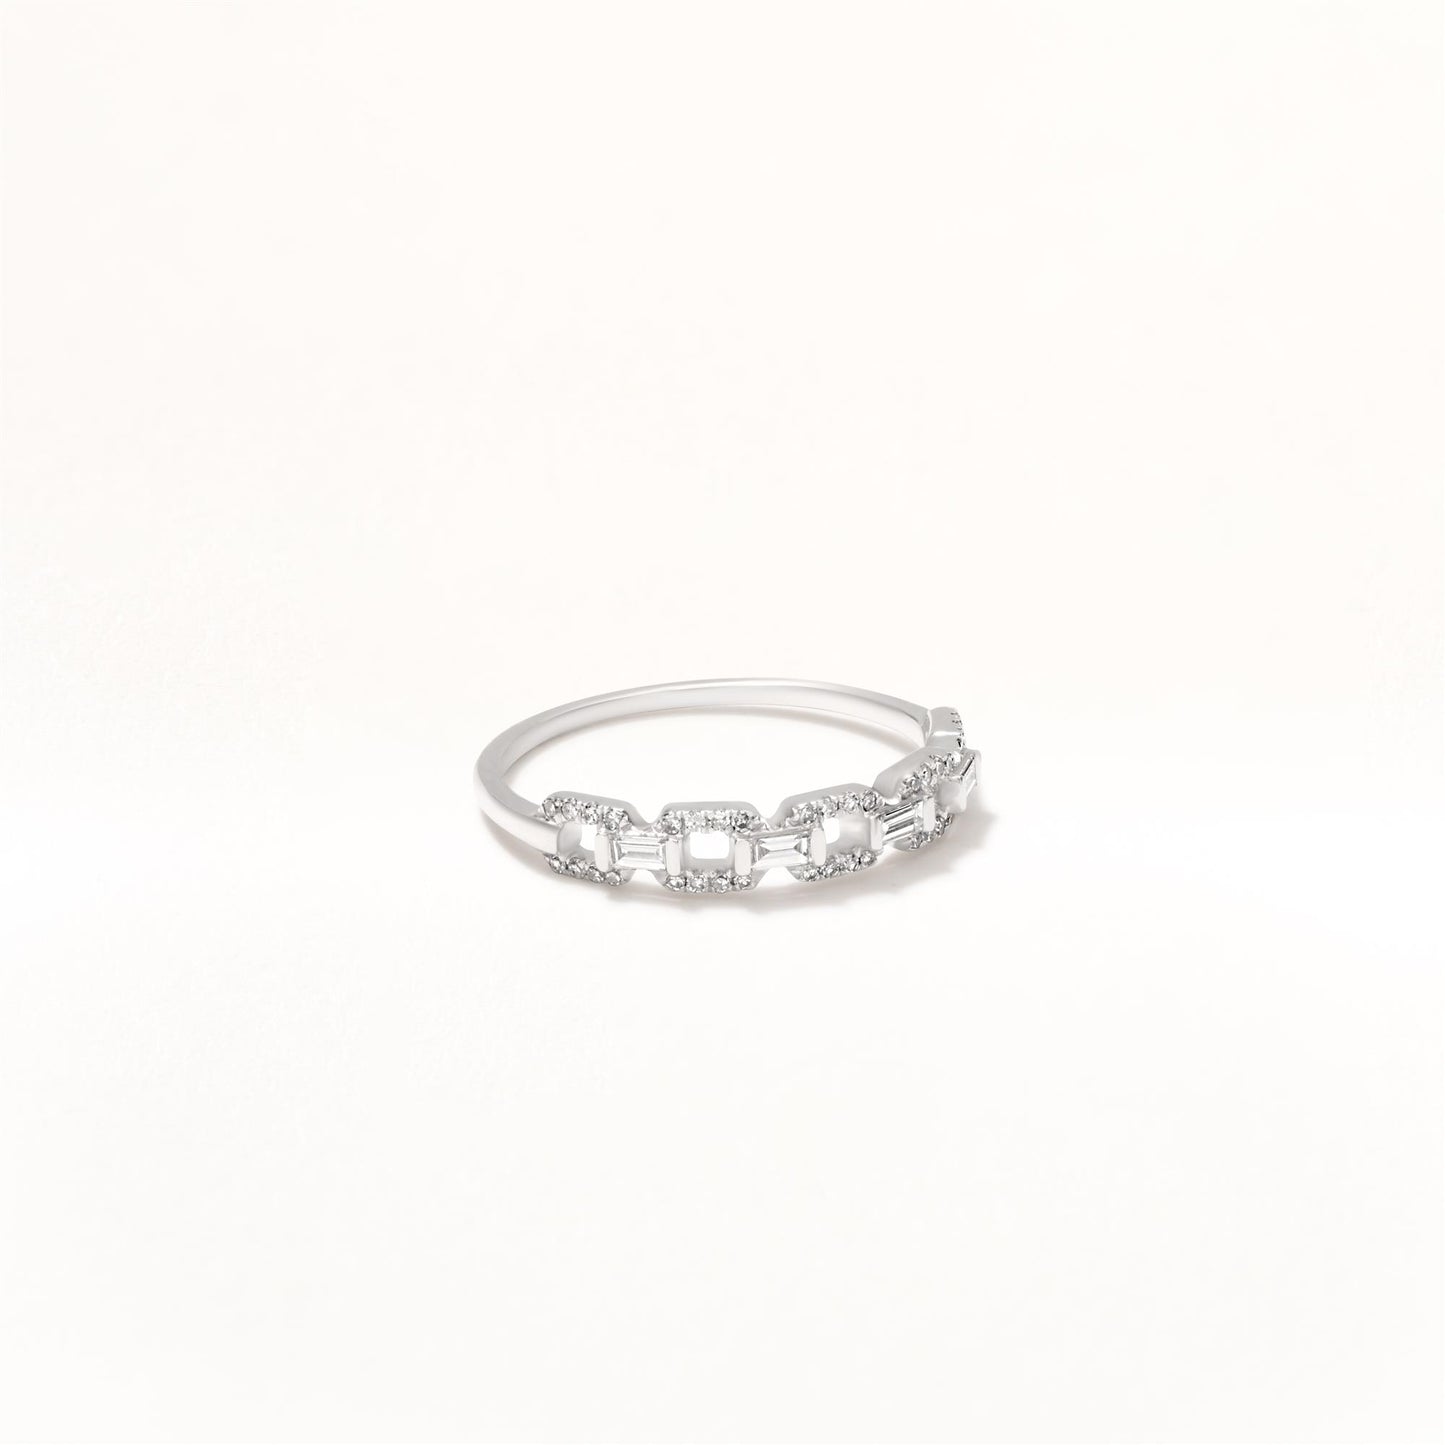 Chain 14K White Gold & Diamond Ring